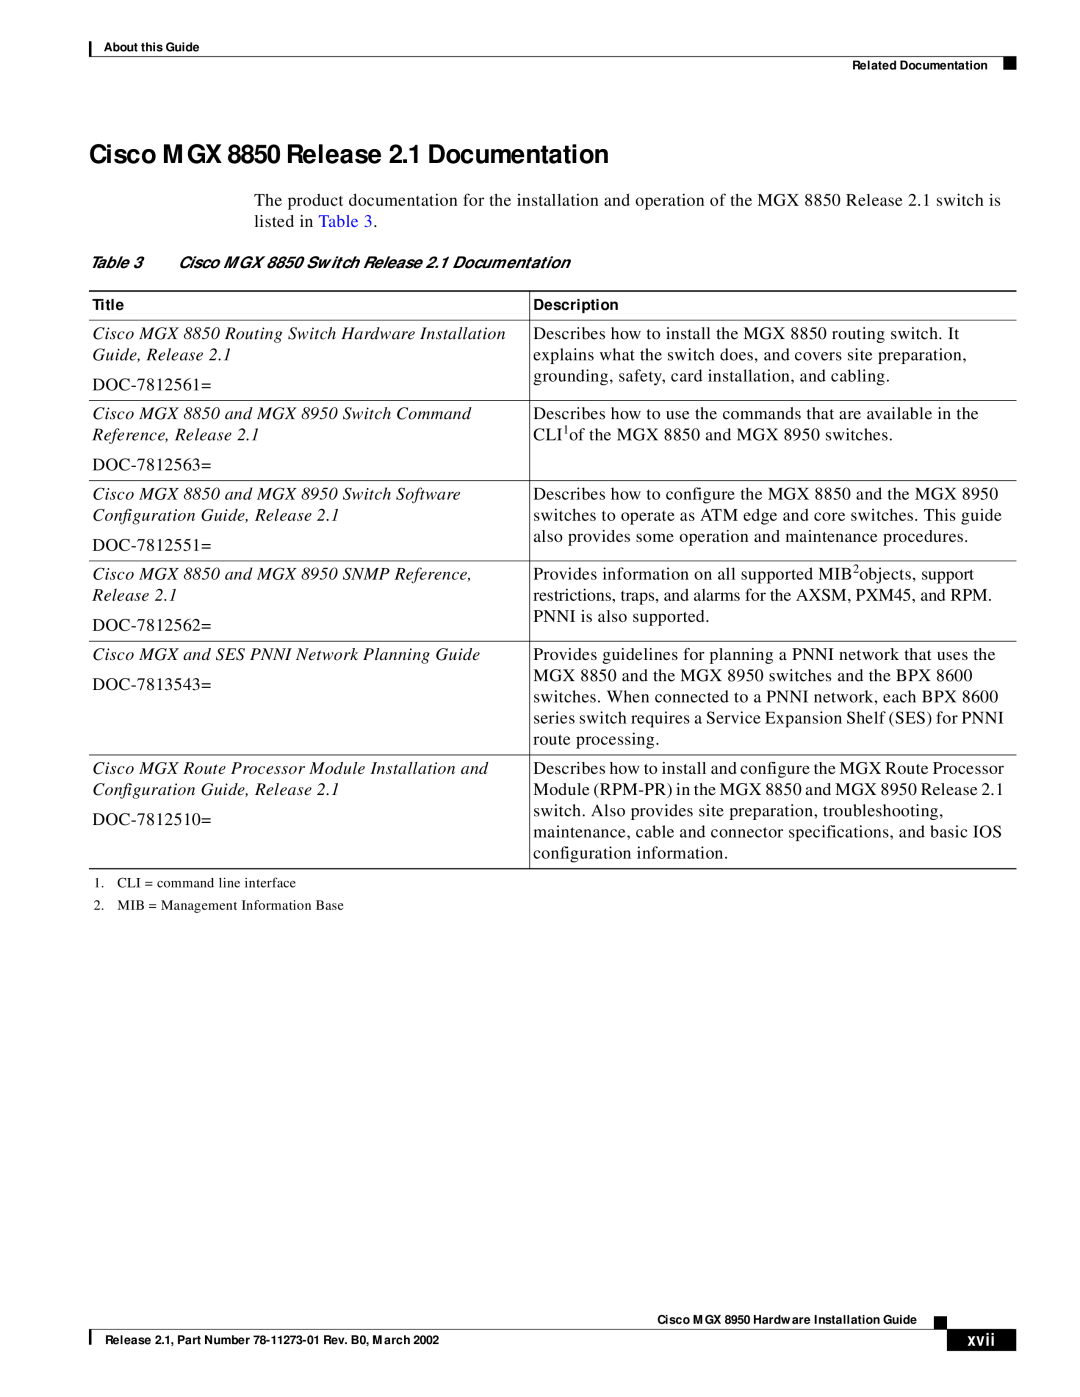 Cisco Systems MGX 8950 appendix Cisco MGX 8850 Release 2.1 Documentation, xvii, Title, Description 